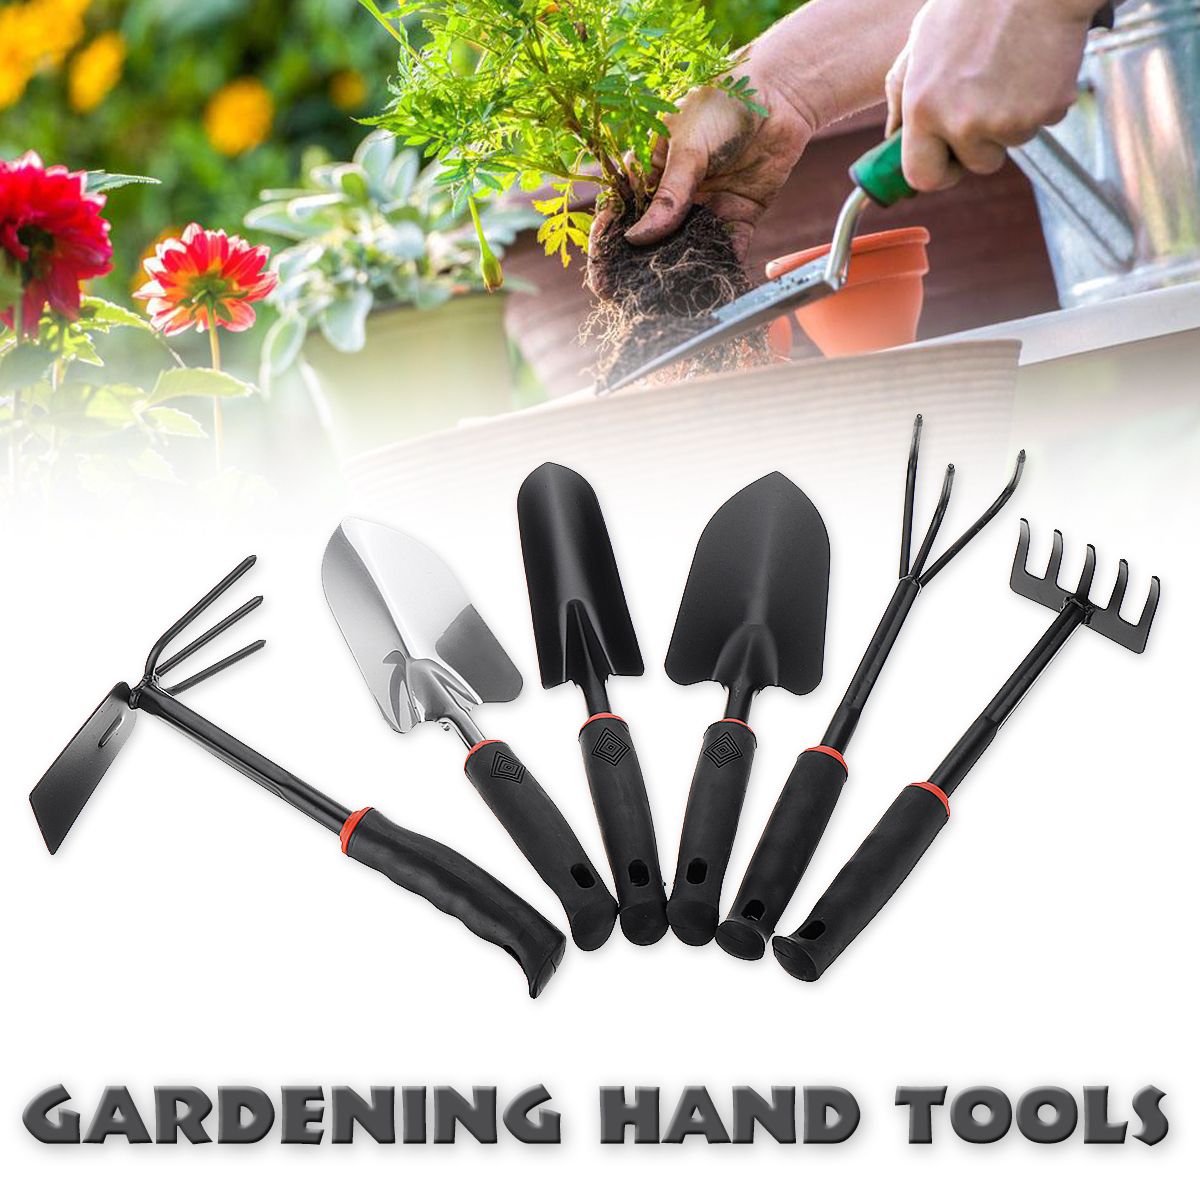 Gardening-Hand-Tools-Trowel-Shovel-Rake-Fork-Hoe-Garden-Cultivator-Transplant-Weeding-kit-1567957